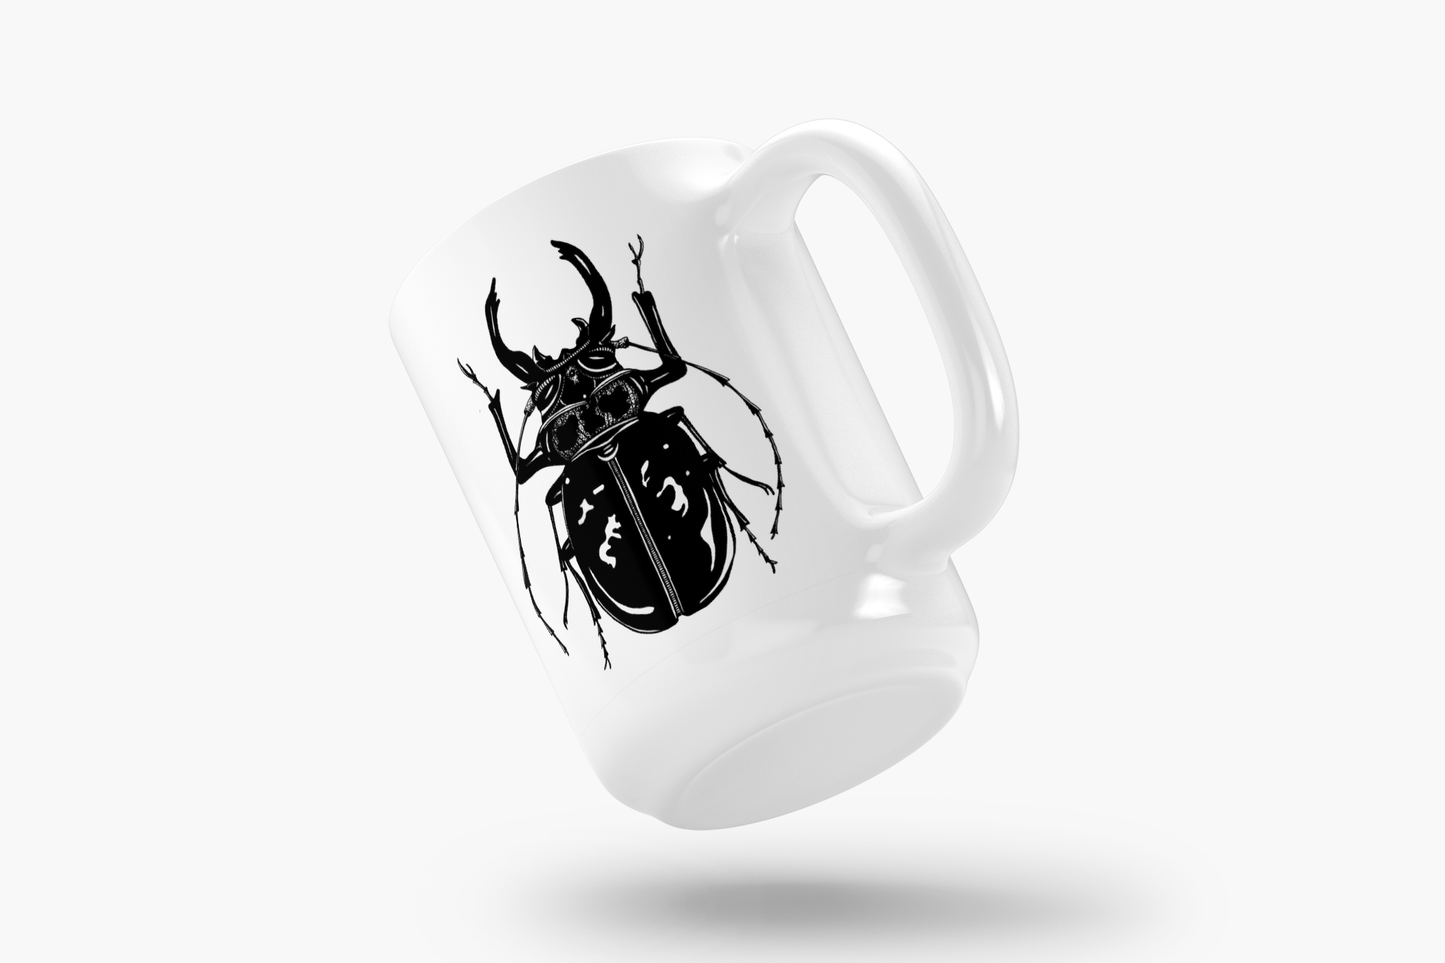 PinkPolish Design Coasters "Beetles" 15oz Mug